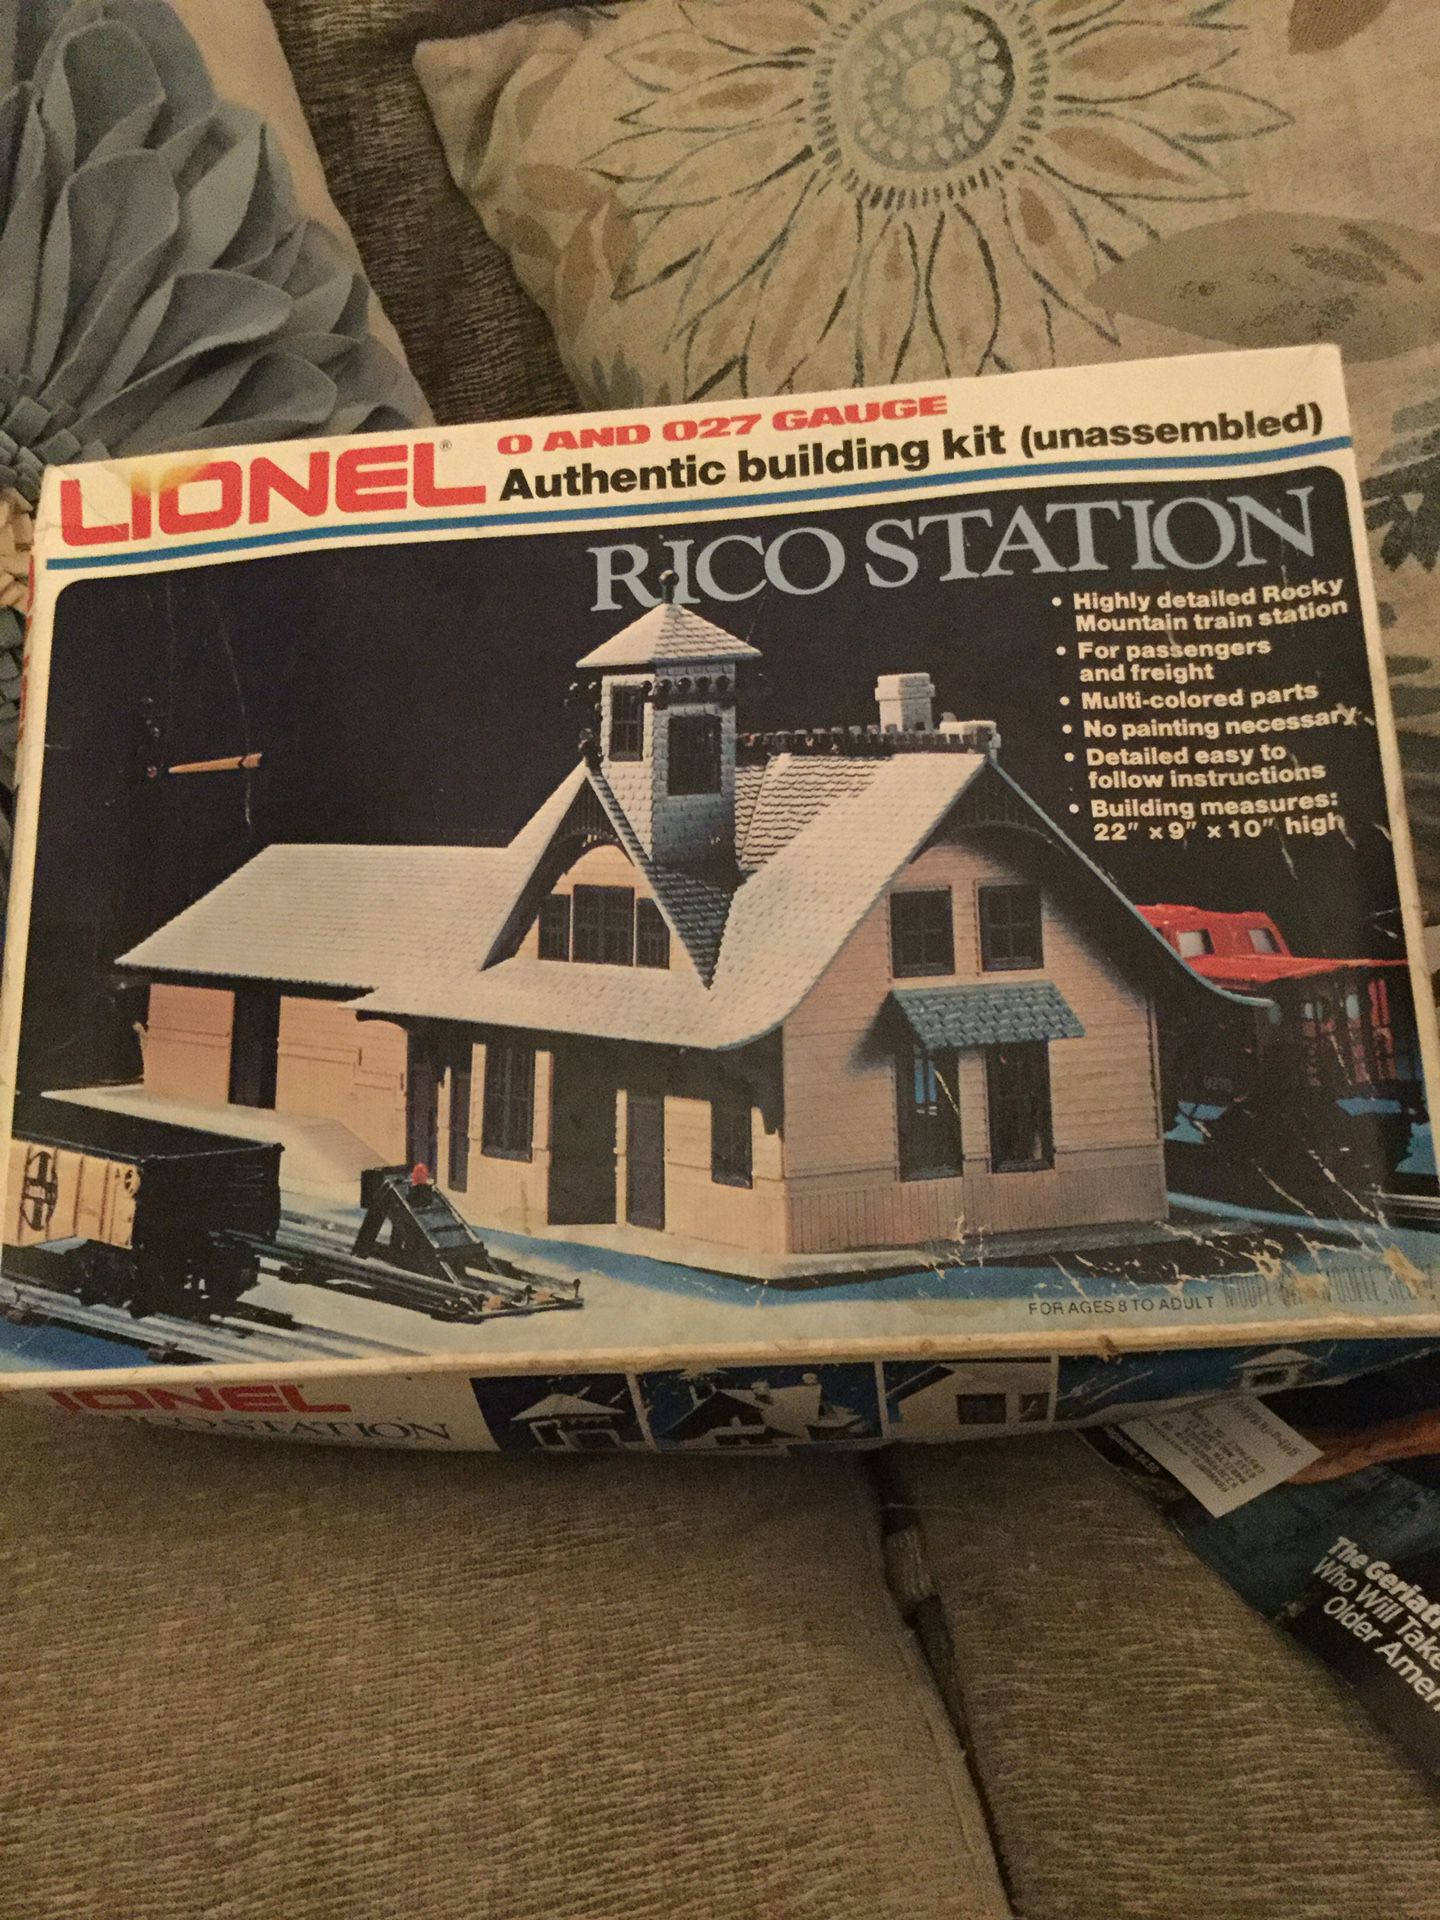 Lionel Rico Station kit